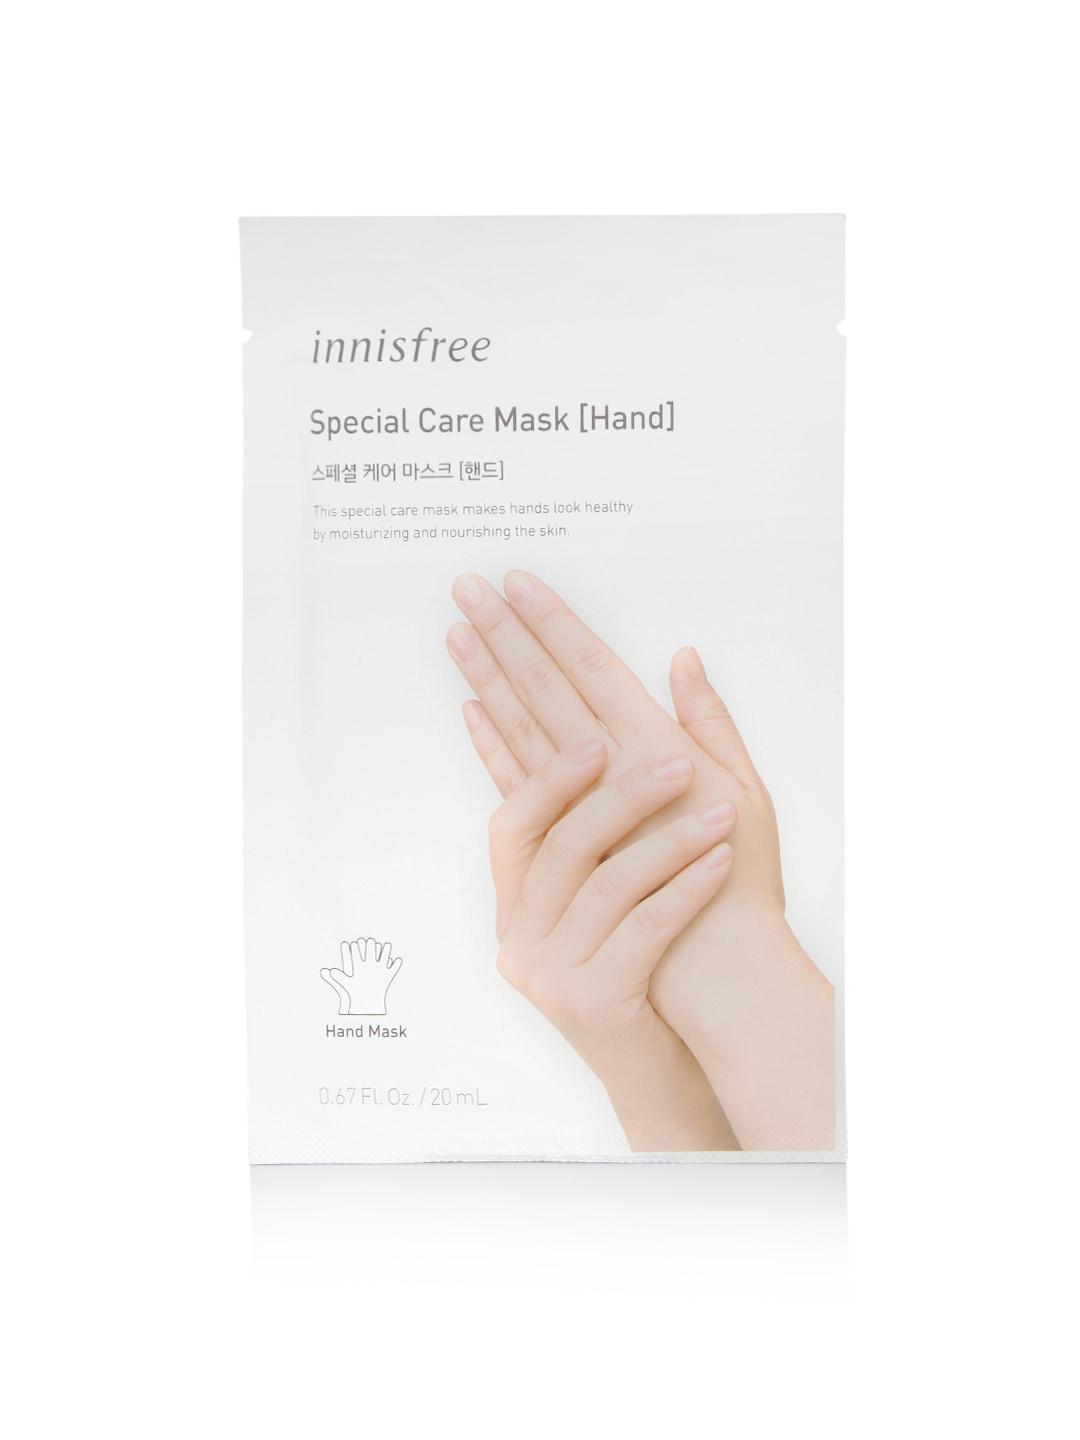 innisfree unisex special care hand mask 20 ml